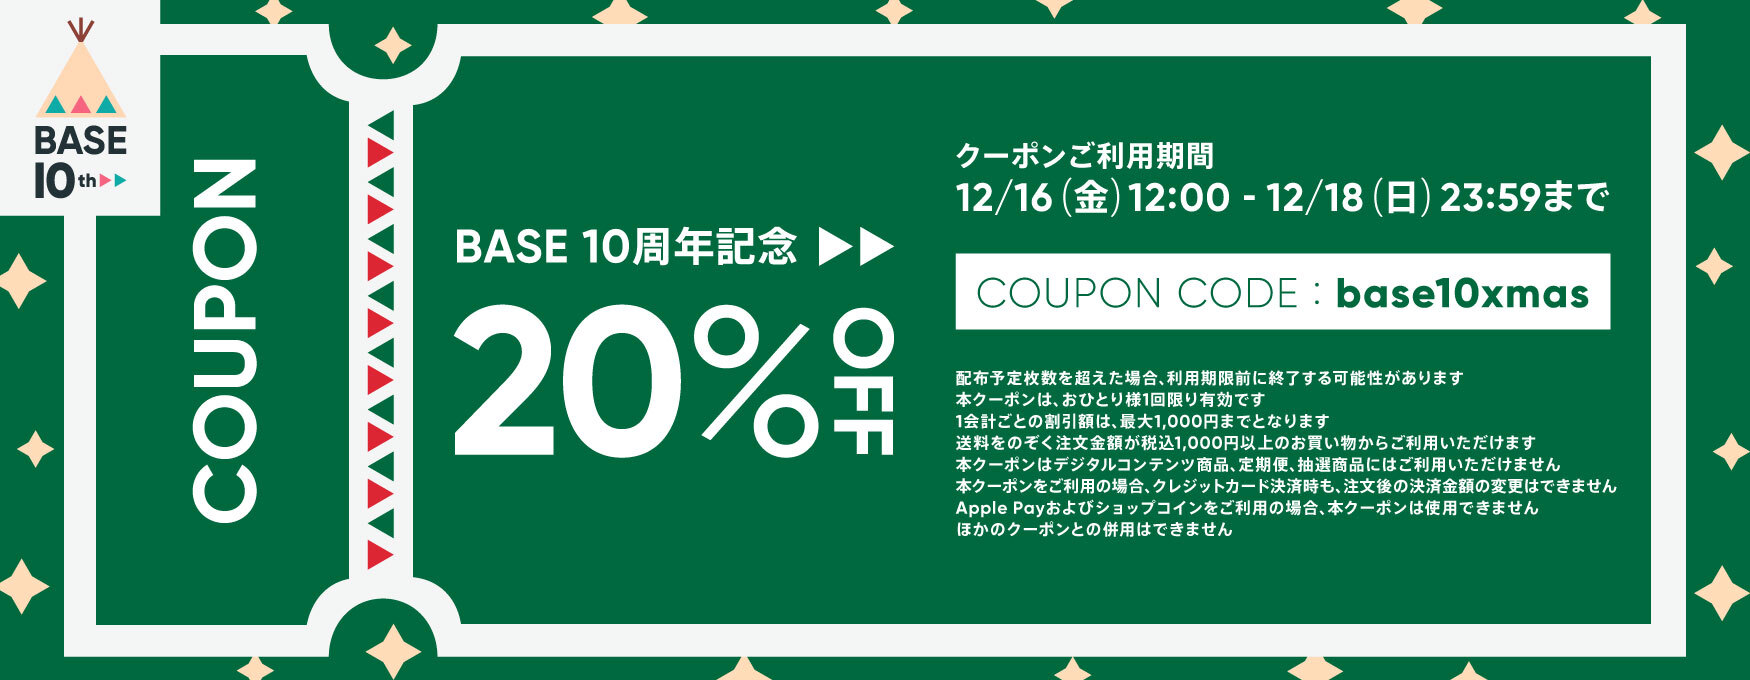 BASE10周年記念 【20%OFF】クーポンキャンペーン♪